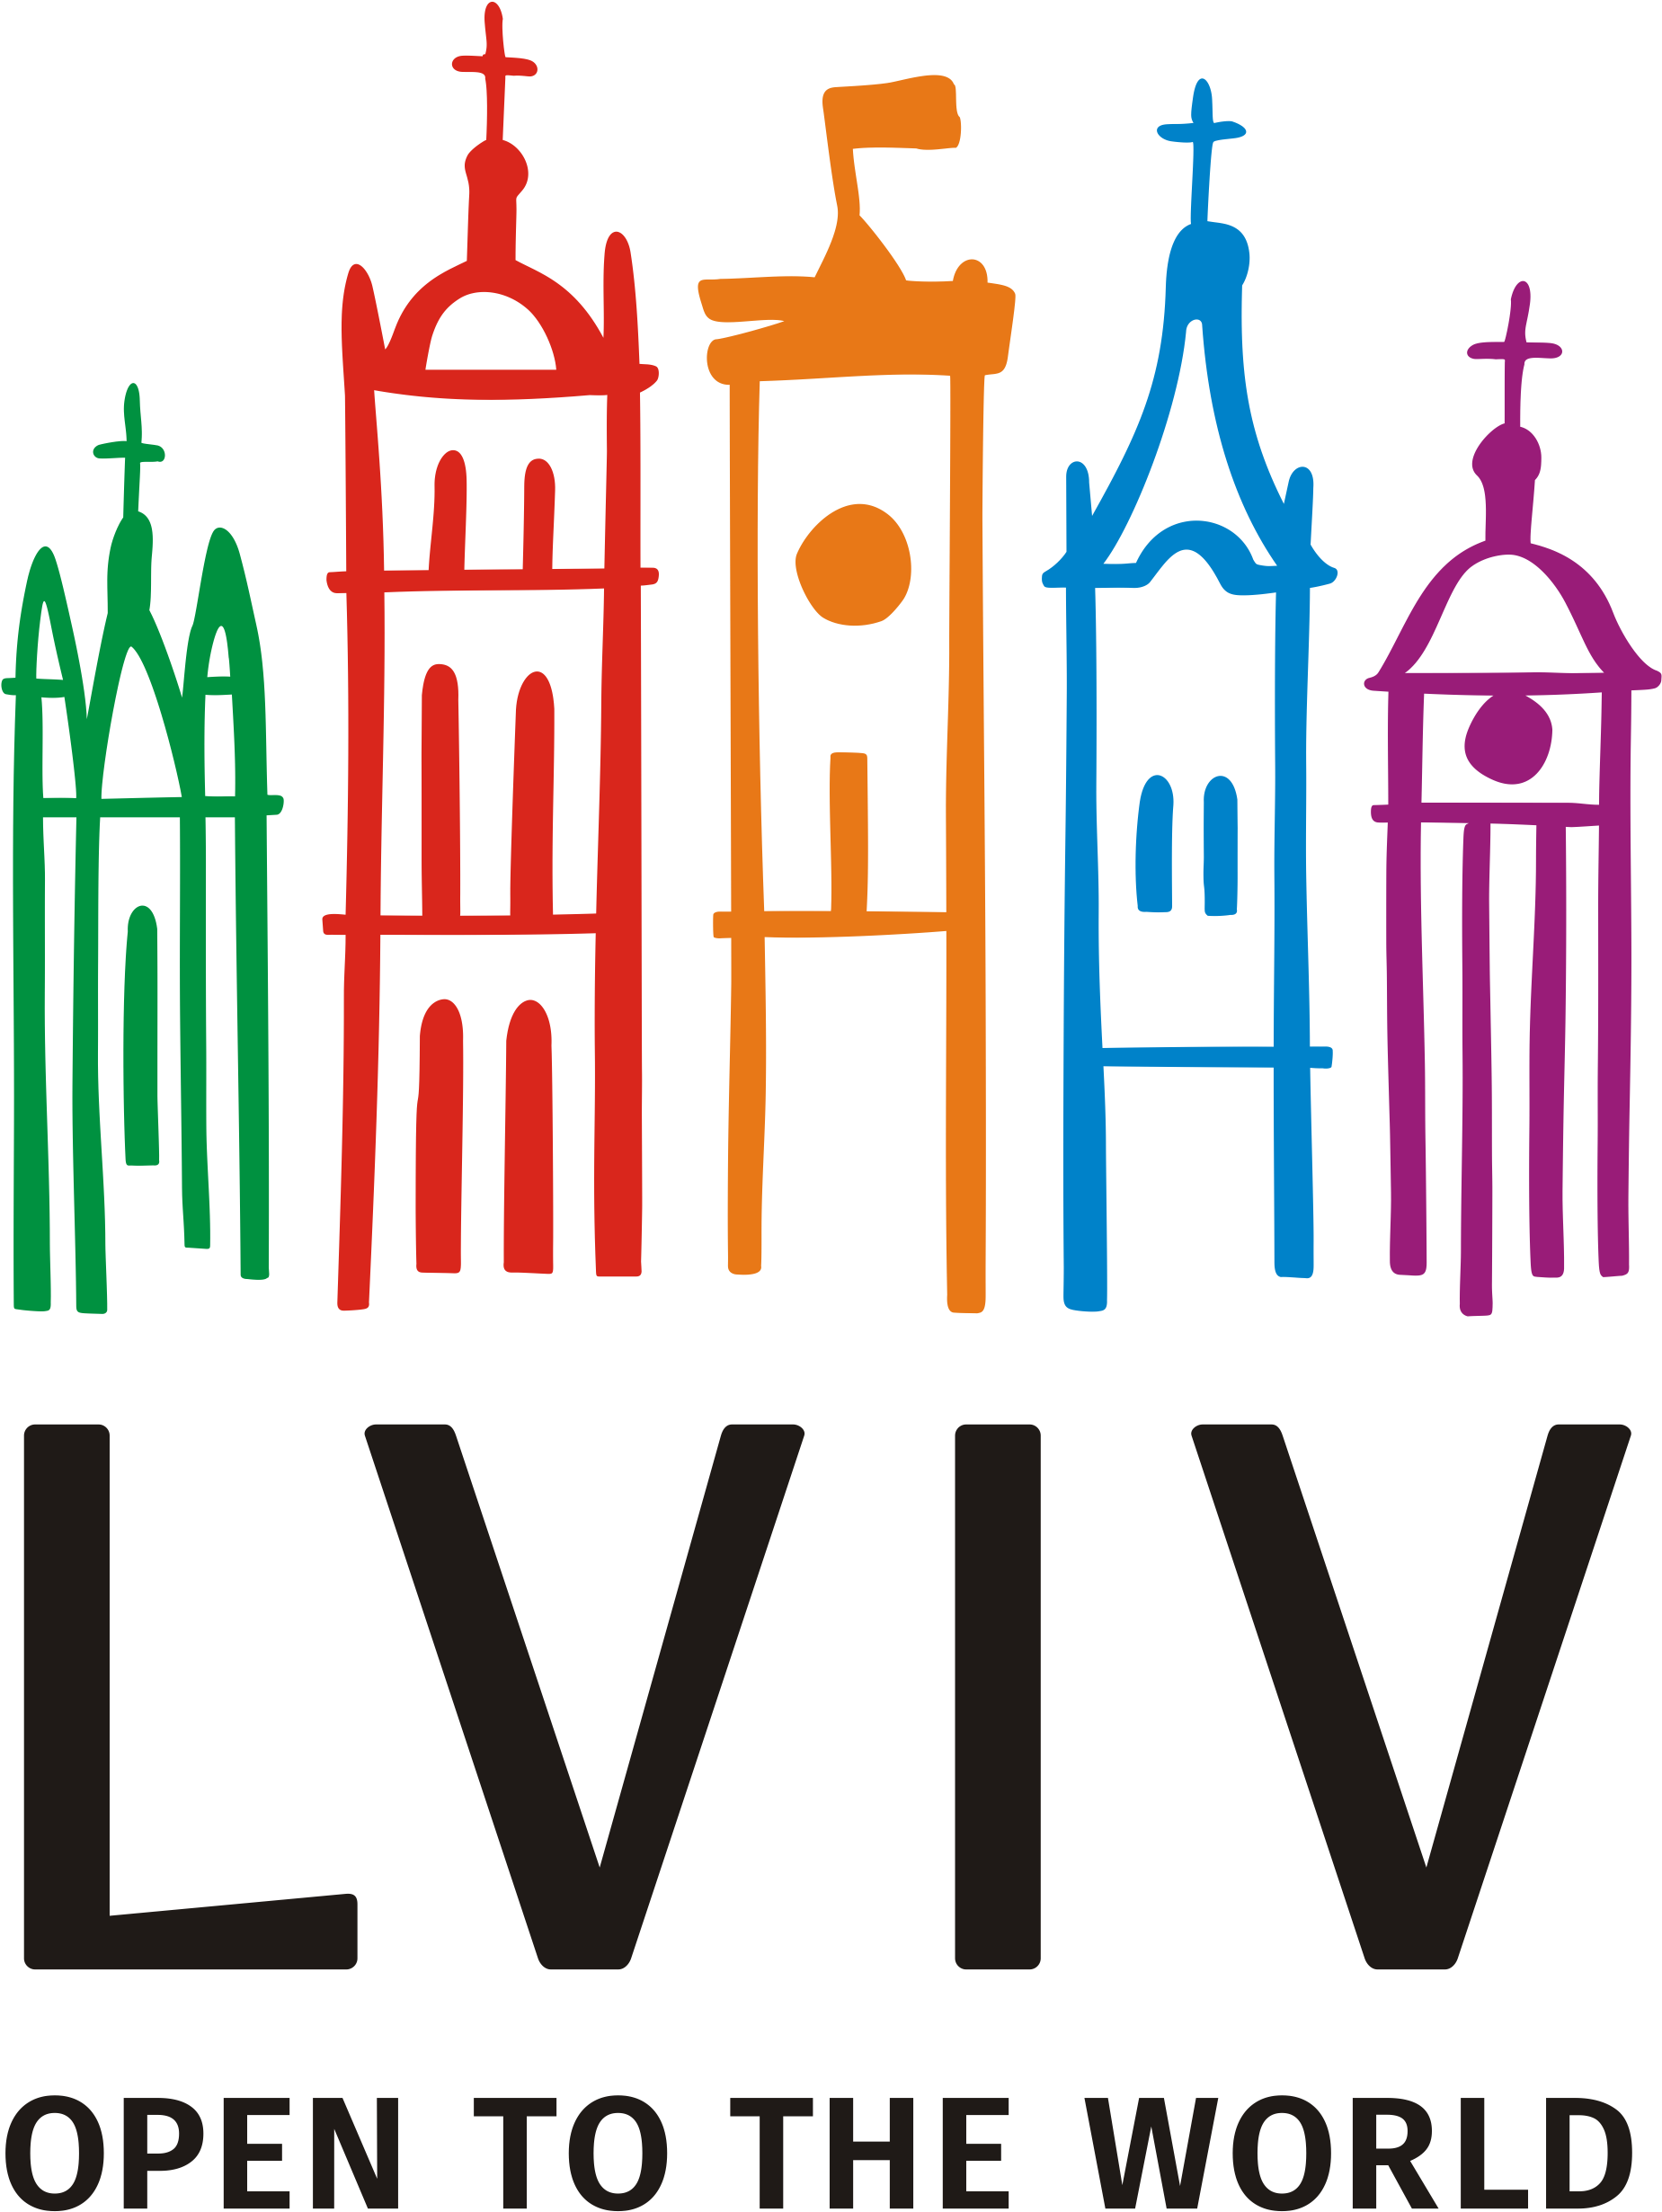 Lviv Tourism & Next Stop Ukraine - Lviv Open To The World (2574x2460)